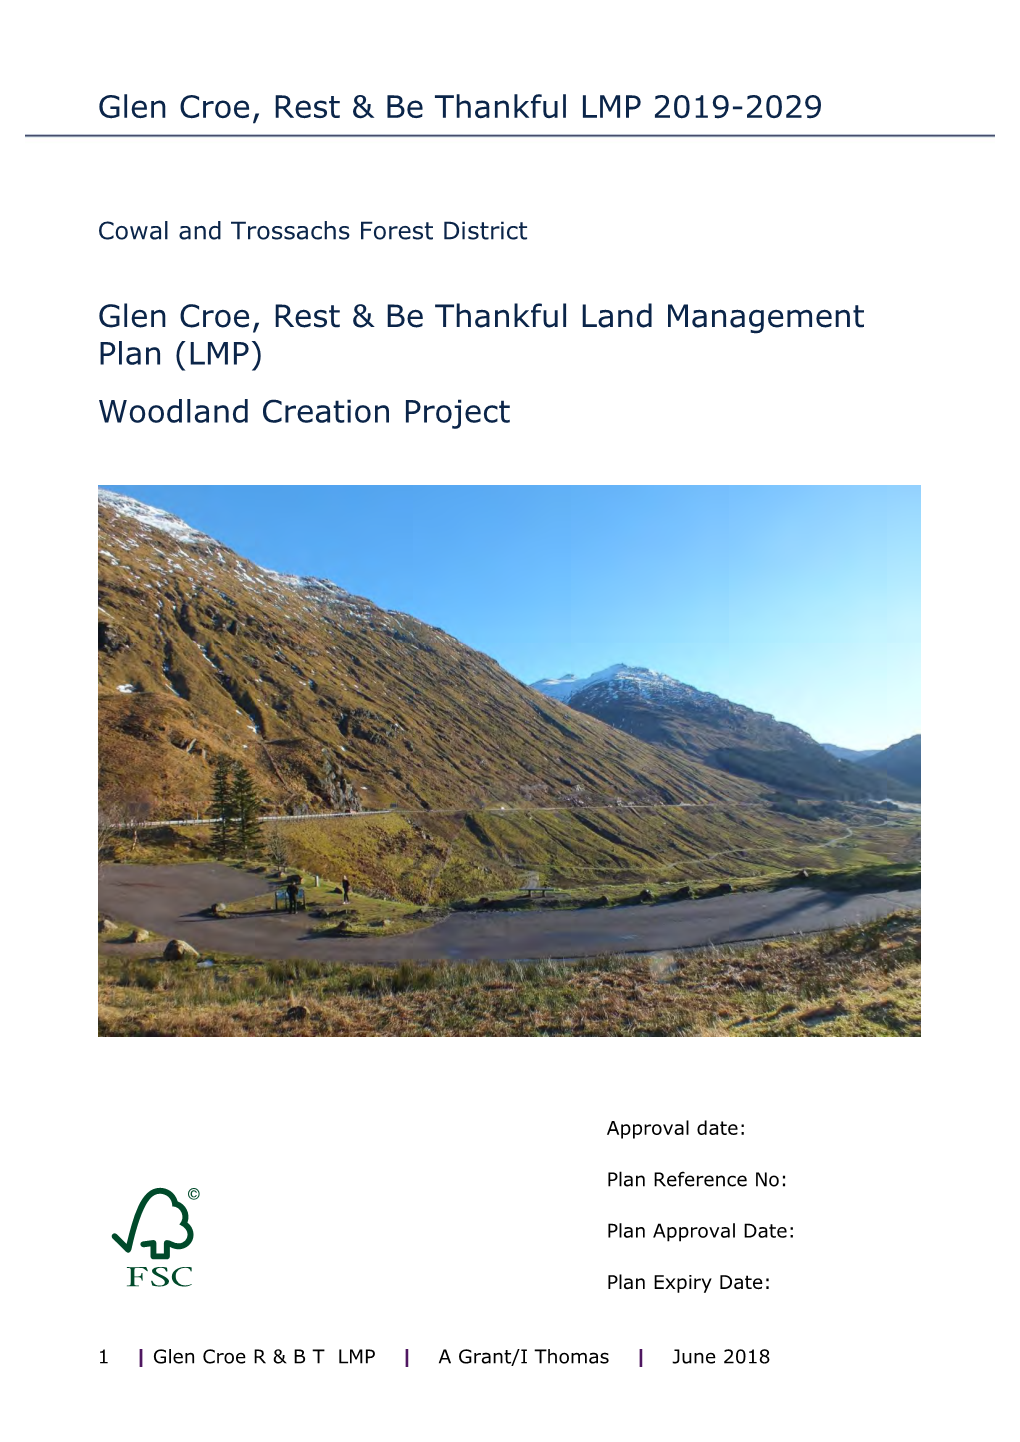 Glen Croe Woodland Creation Project